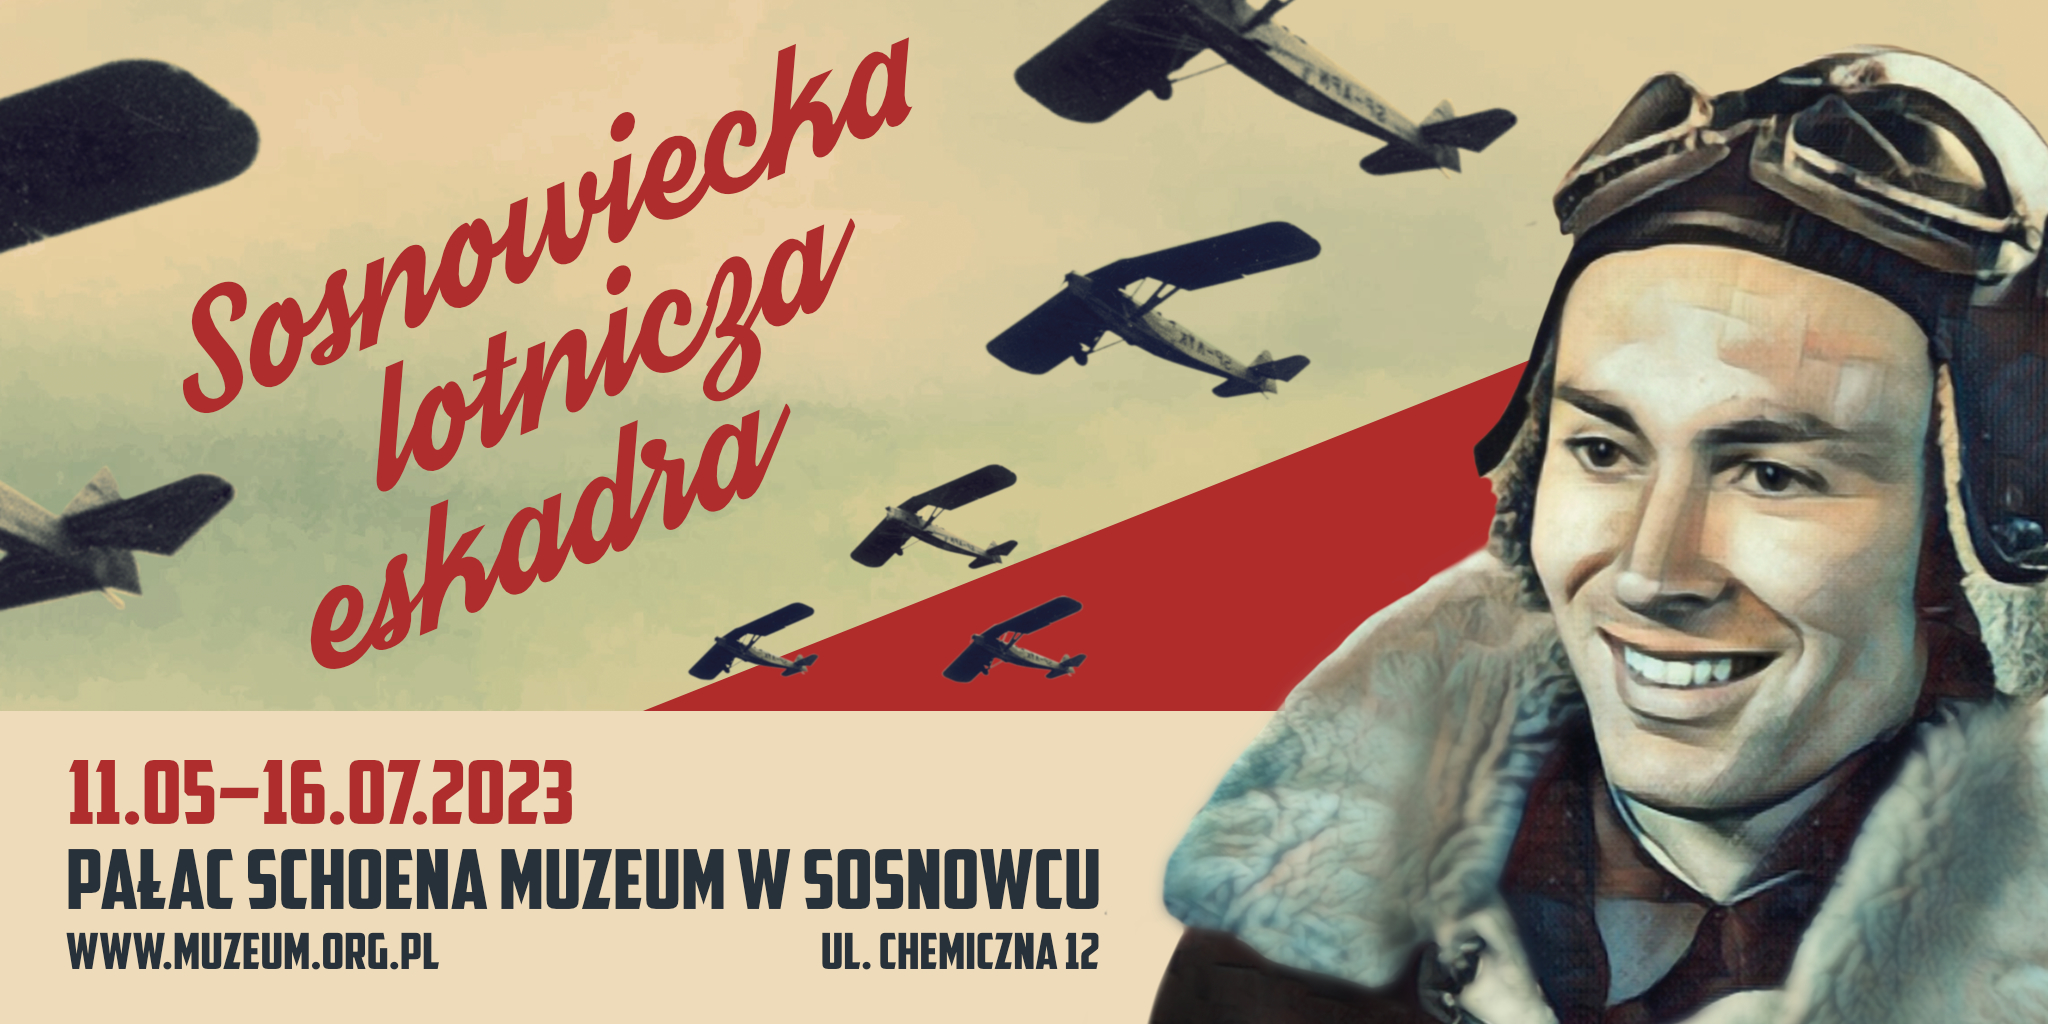 Sosnowiecka lotnicza eskadra 11.05-16.07